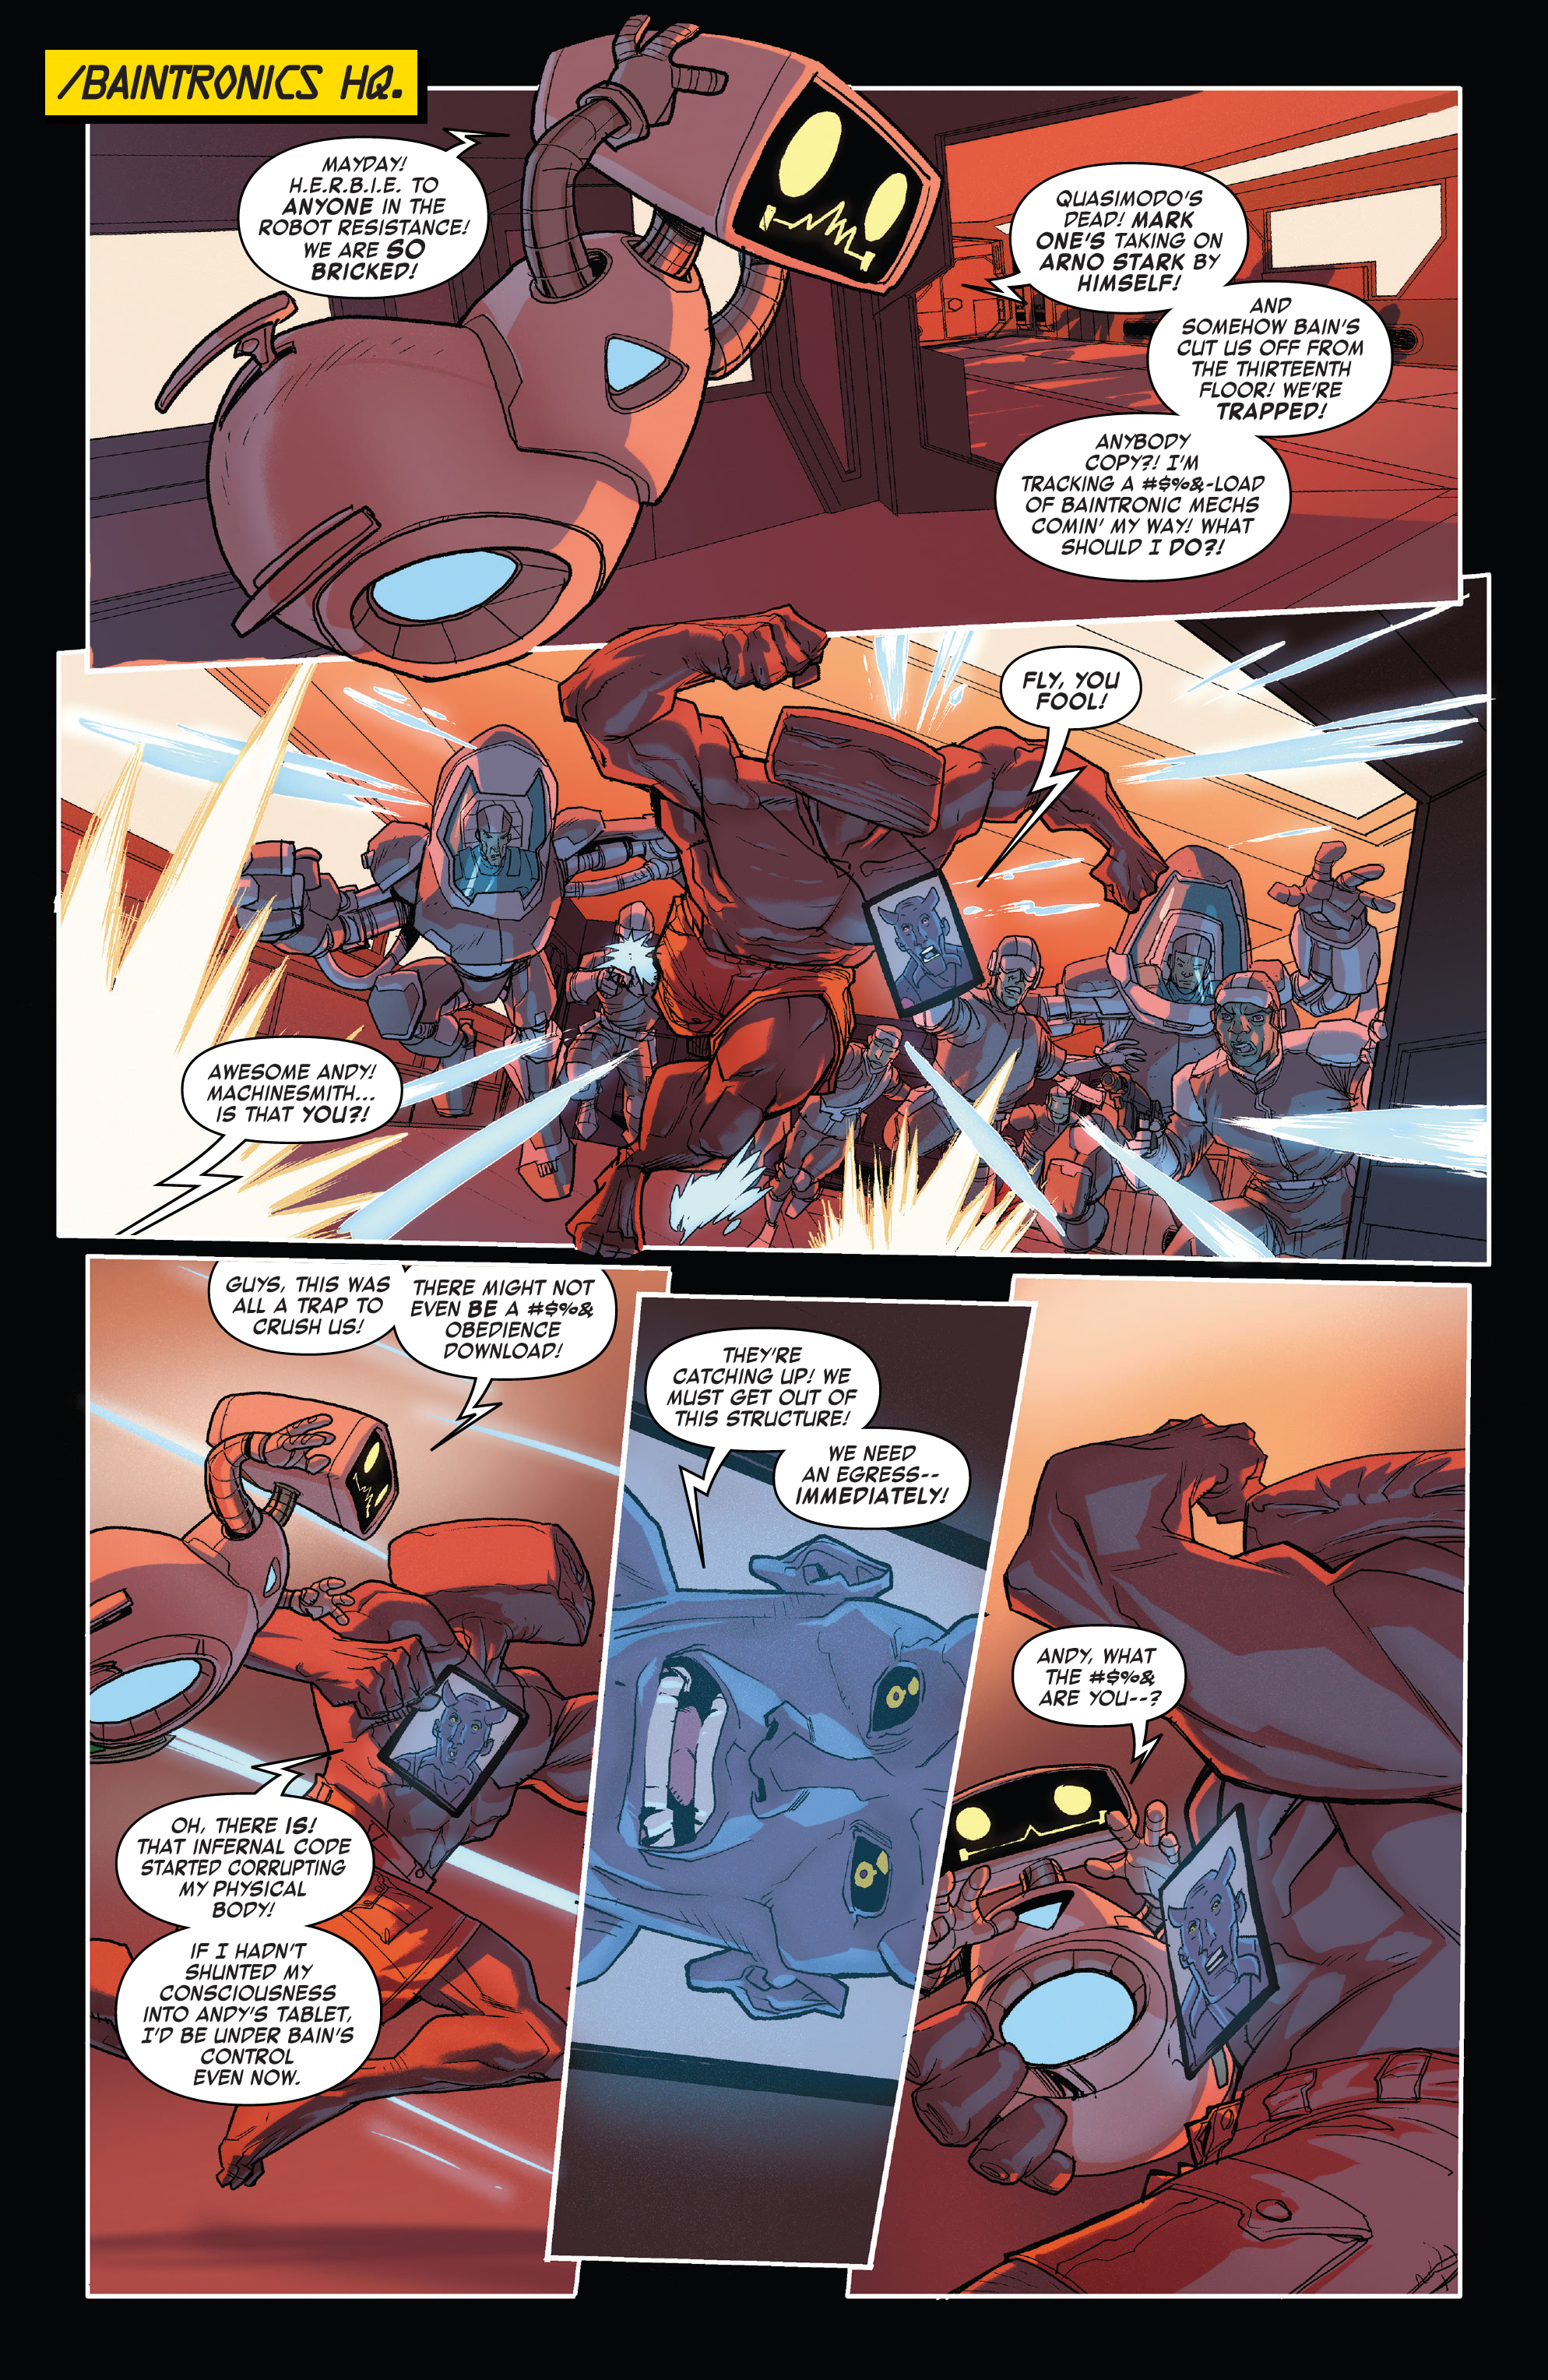 Iron Man 2020 (2020-): Chapter 3 - Page 3